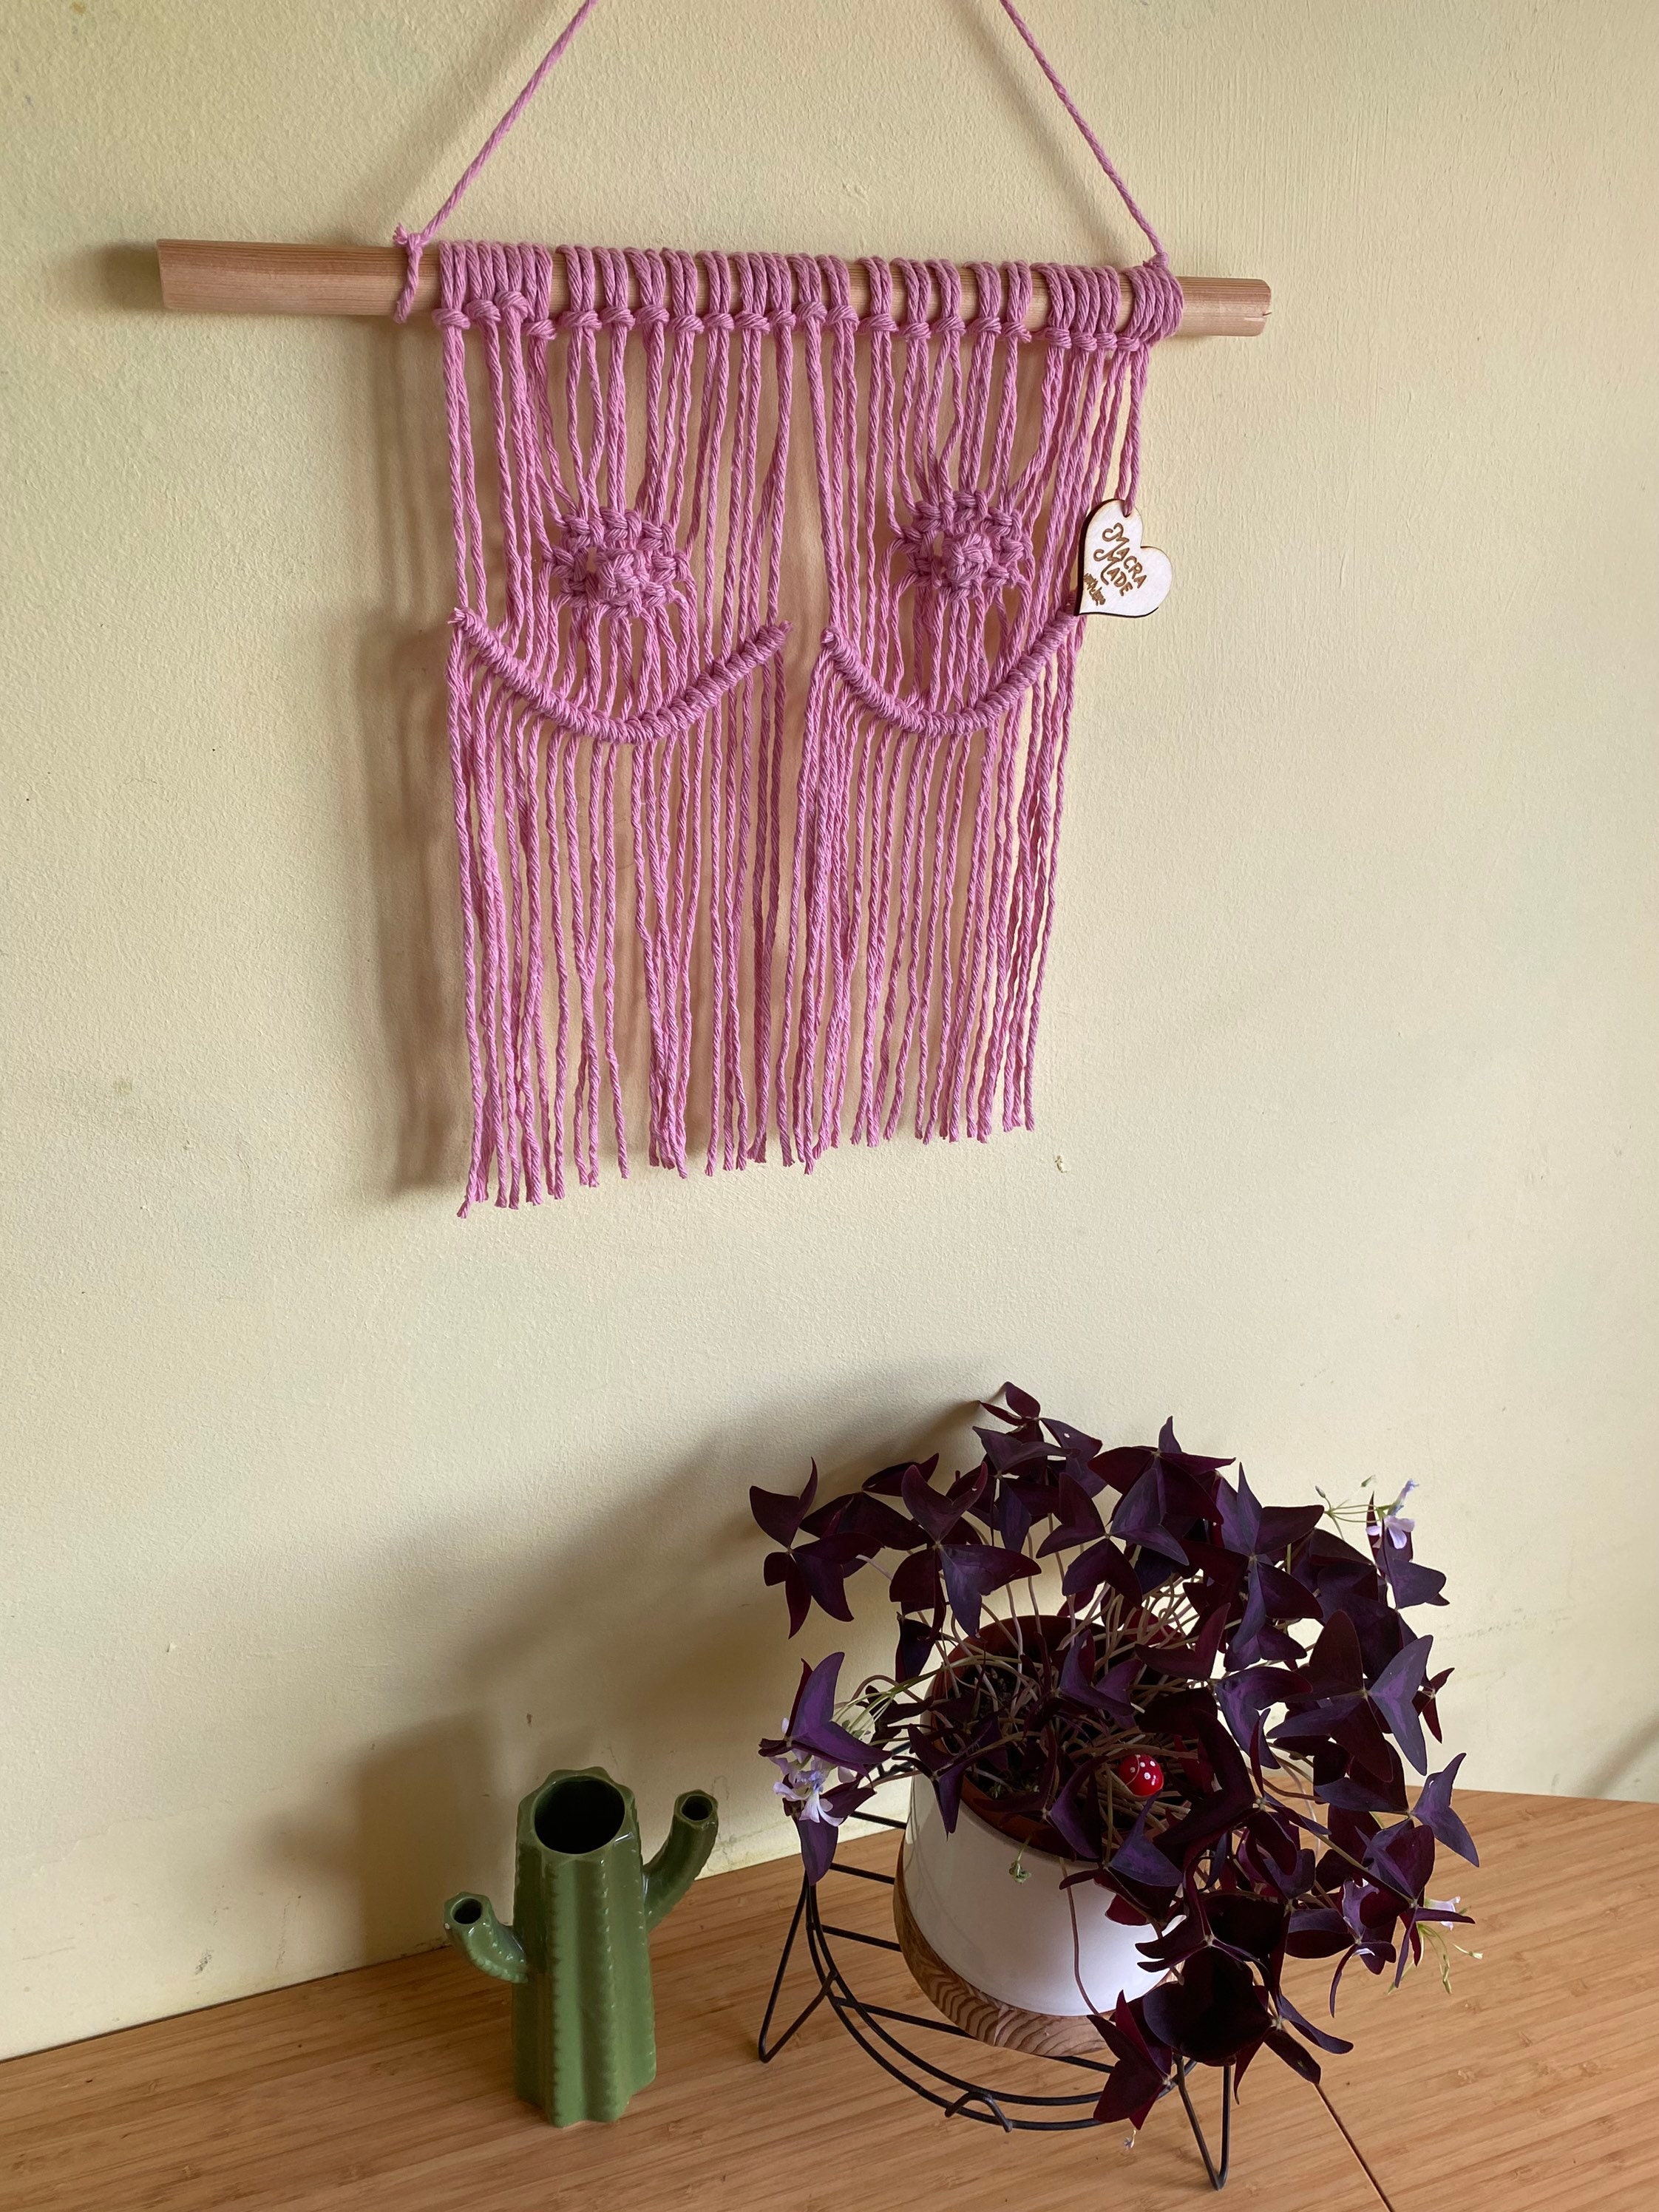 Macrame boobs body positive wall hanging feminine art – Macra-Made